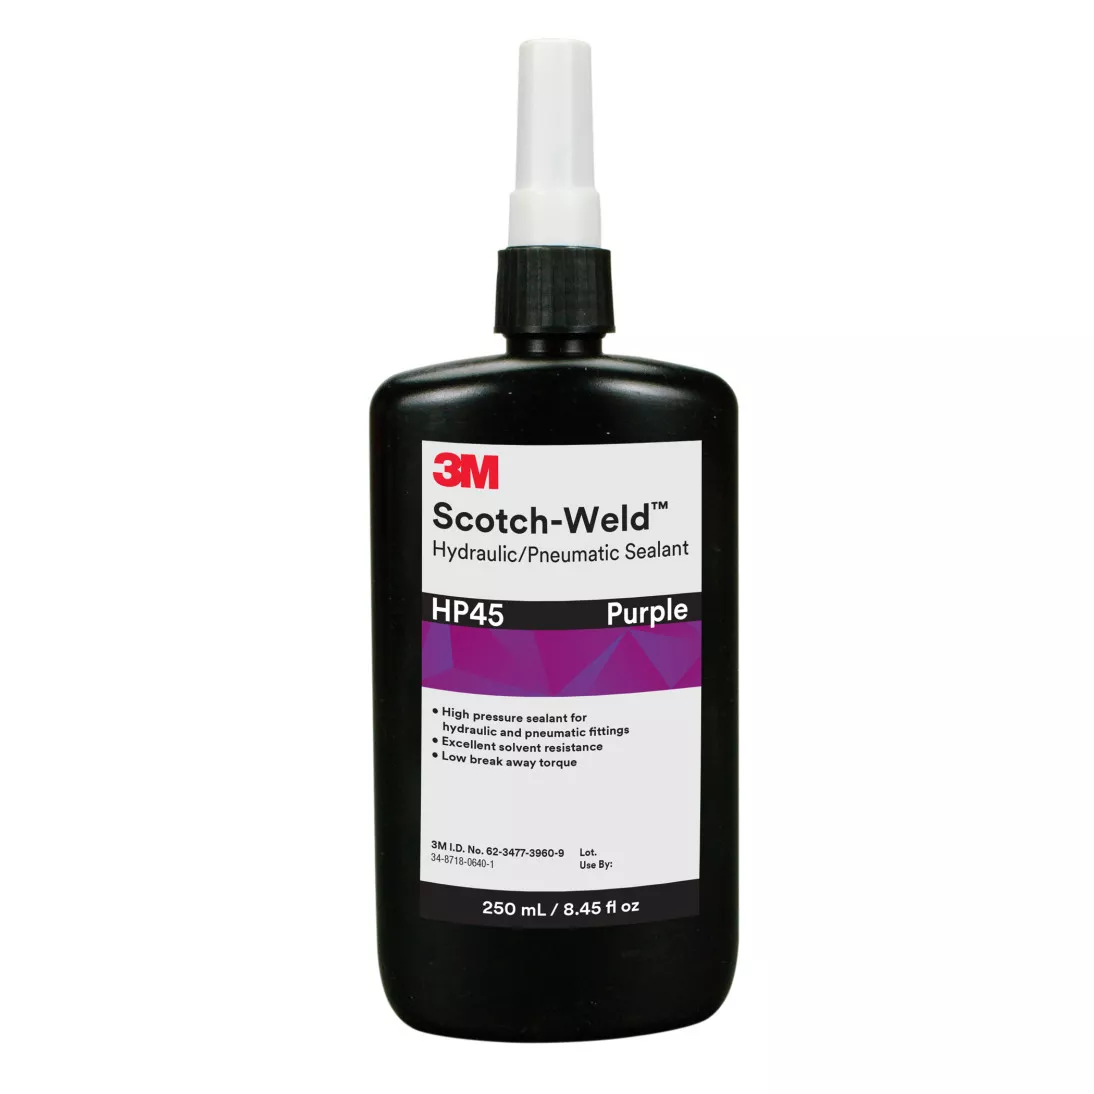 3M™ Scotch-Weld™ Hydraulic/Pneumatic Sealant HP45, Purple, 250 mL
Bottle, 2/case